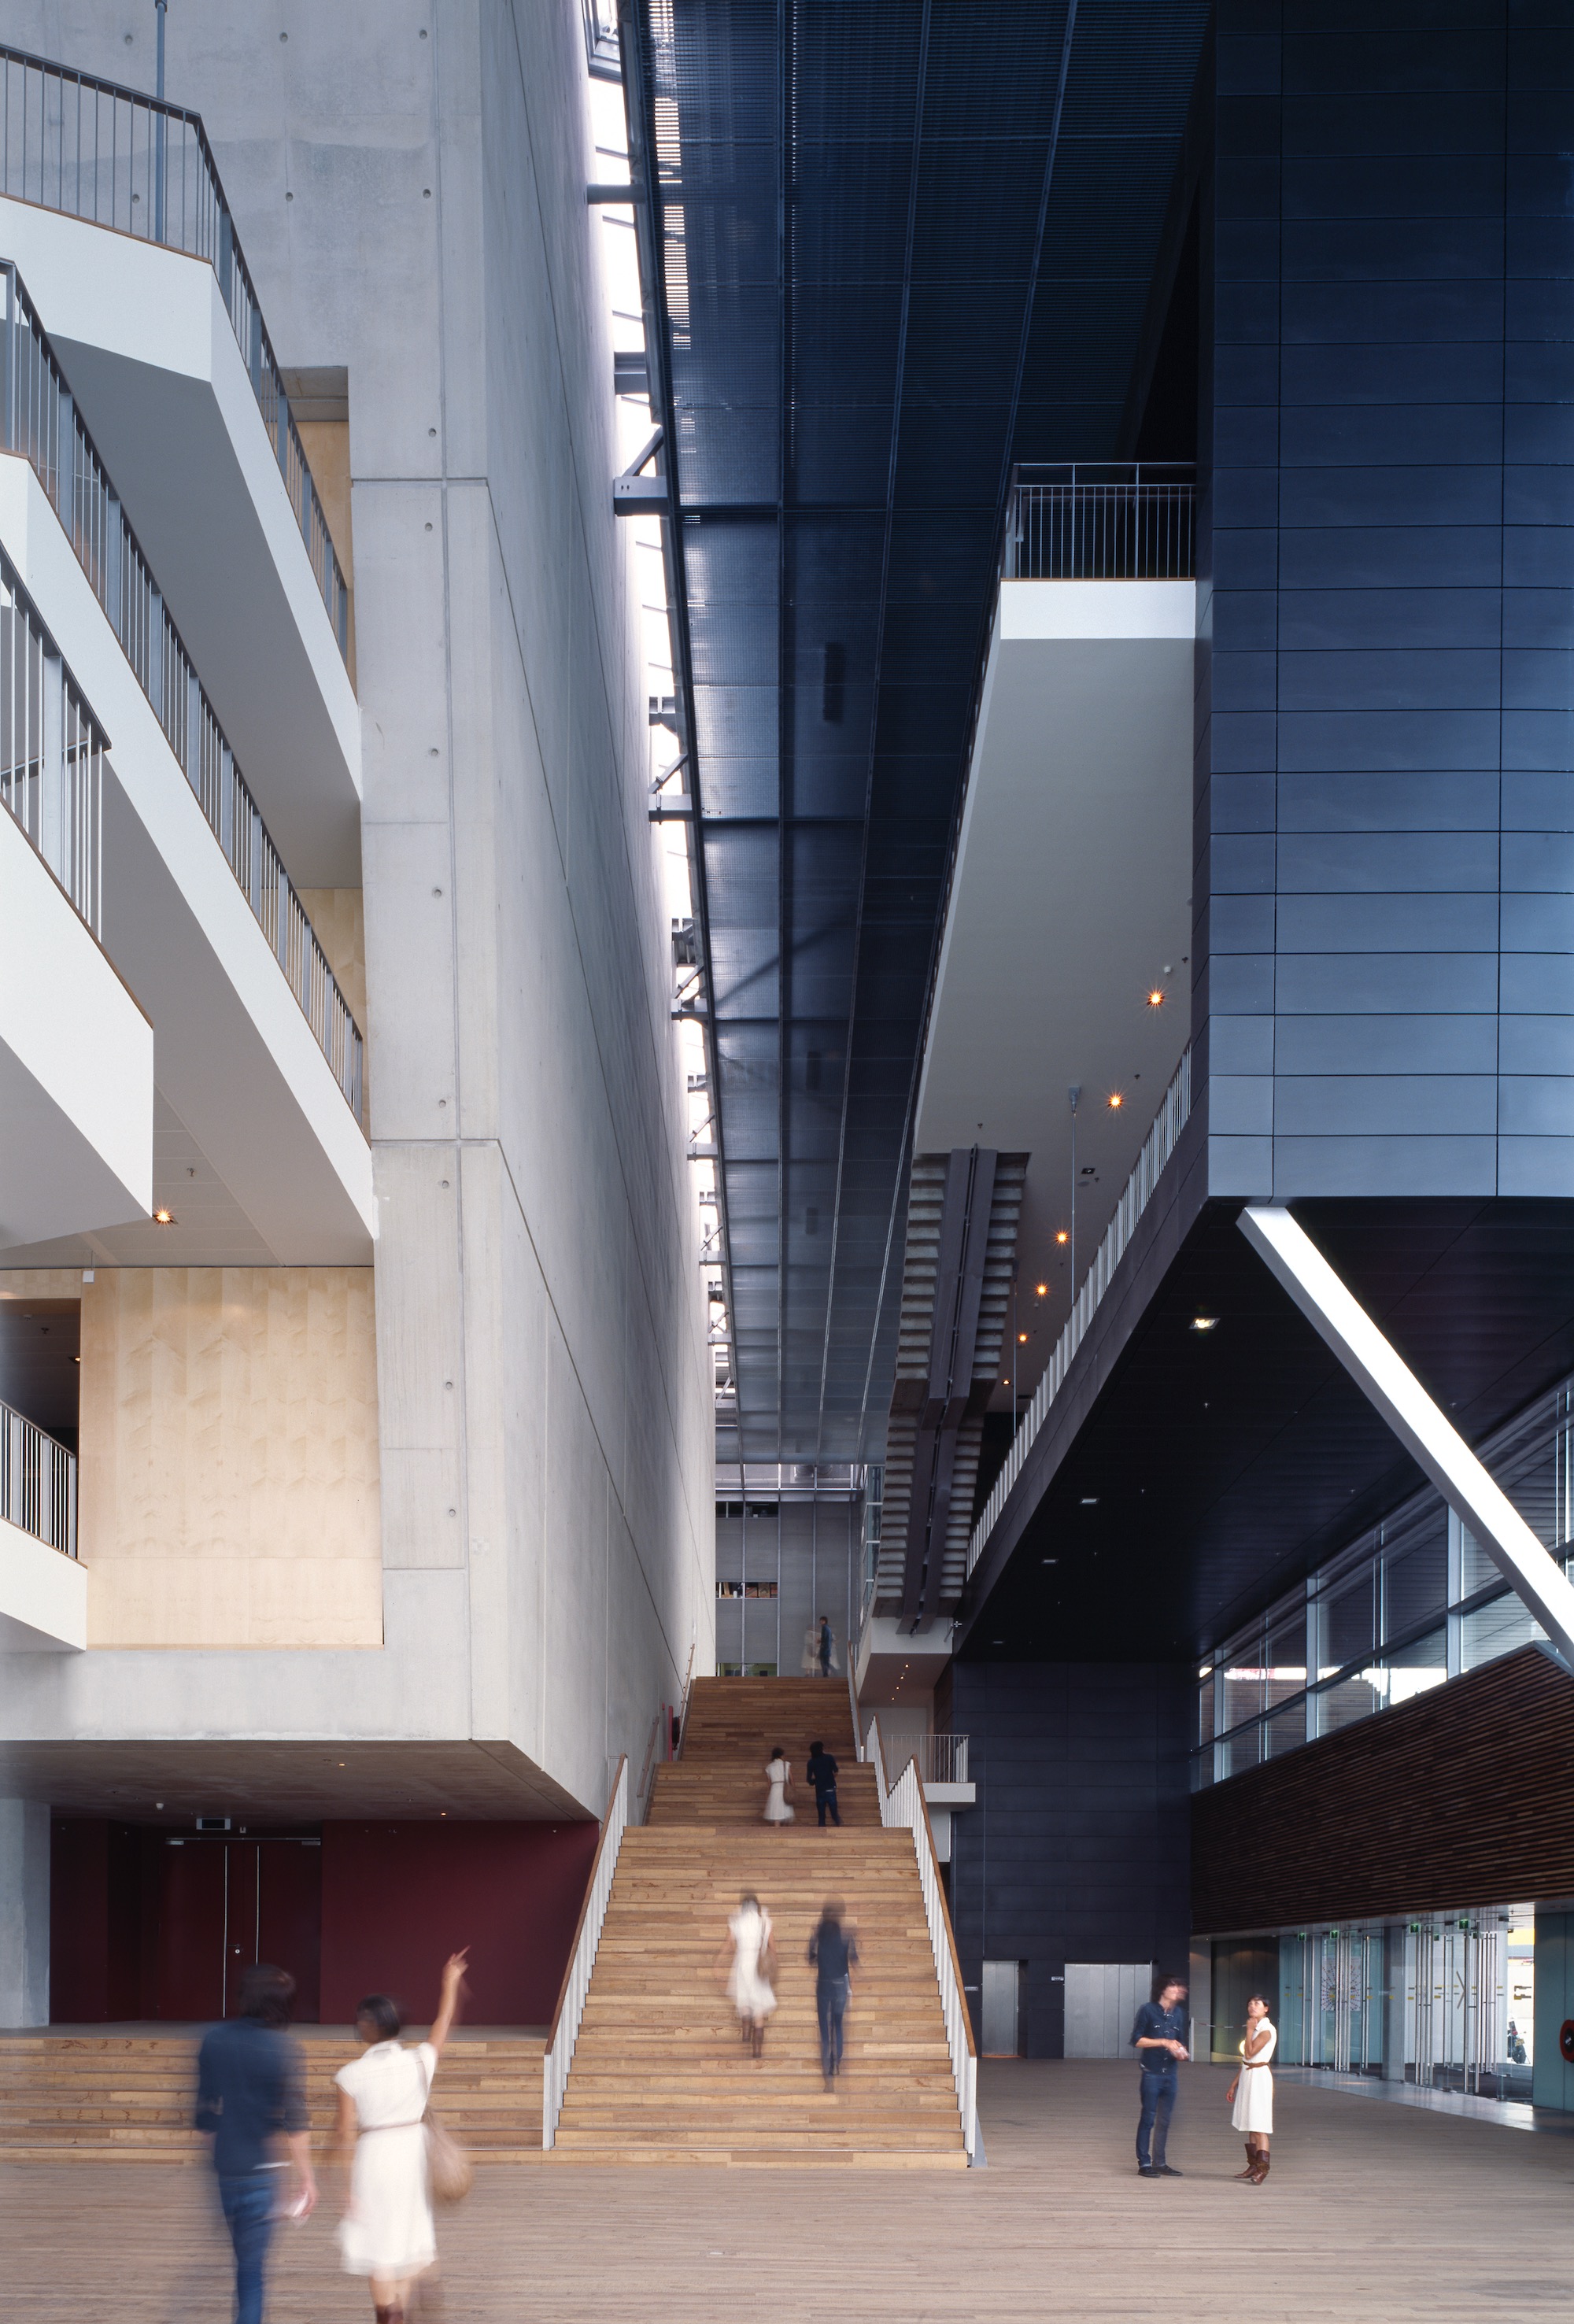 Bimhuis by the Muziekgebouw - Danish Architecture Center - DAC